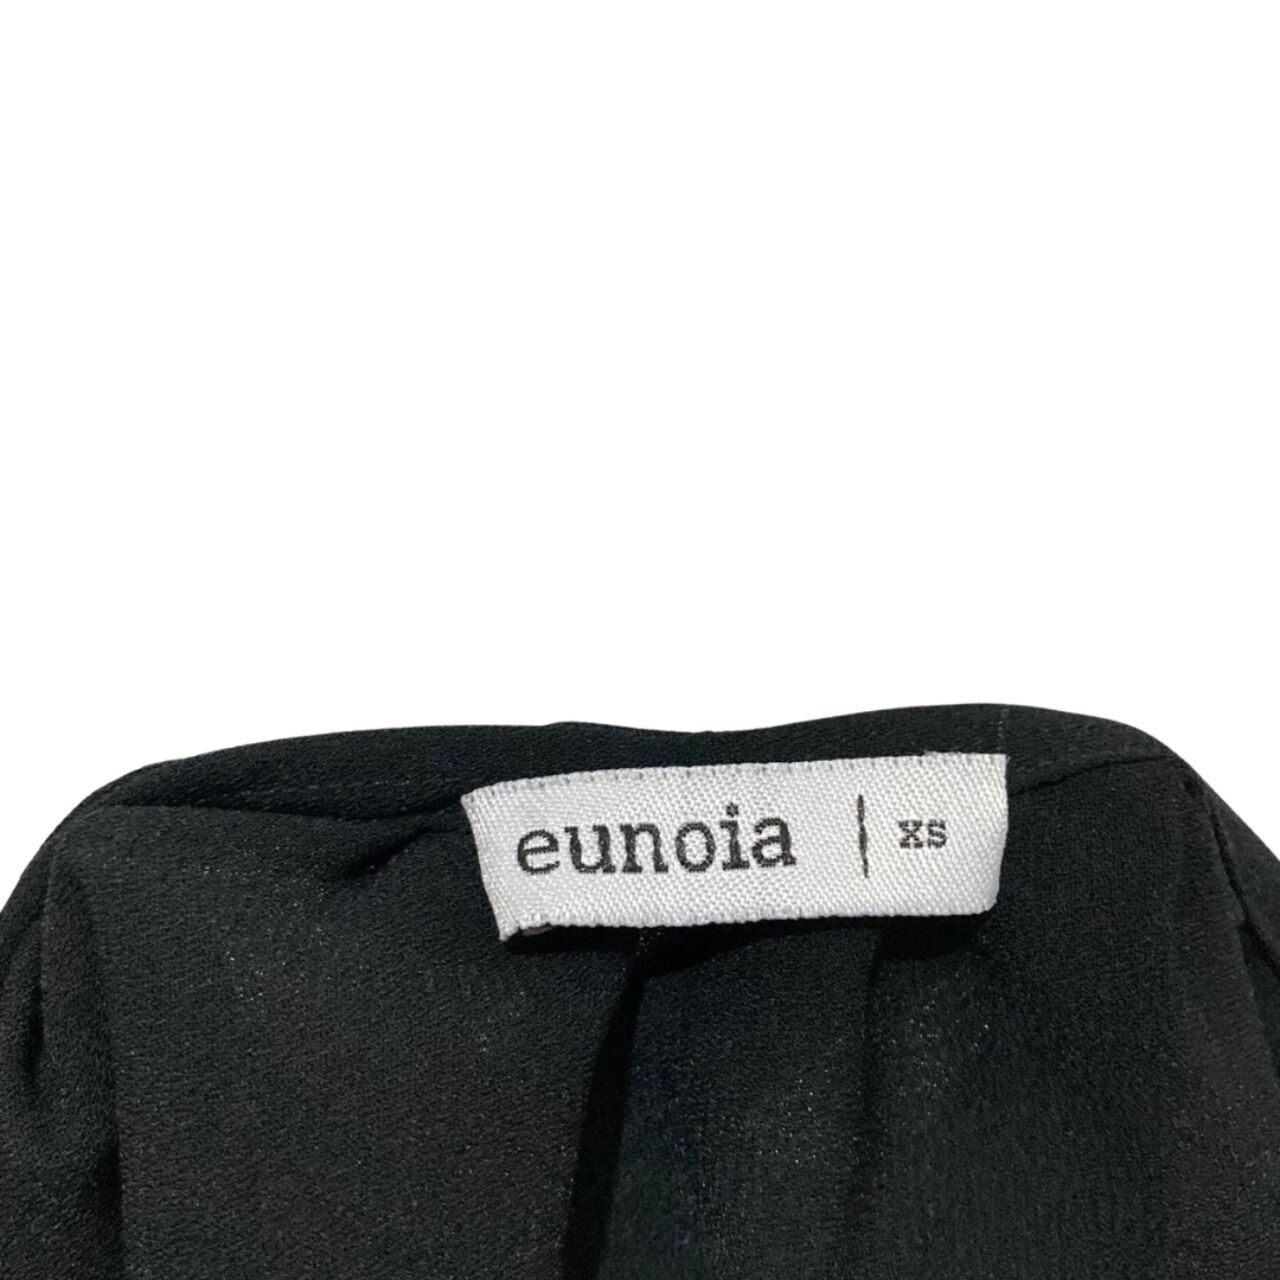 Eunoia Black Sleeveless